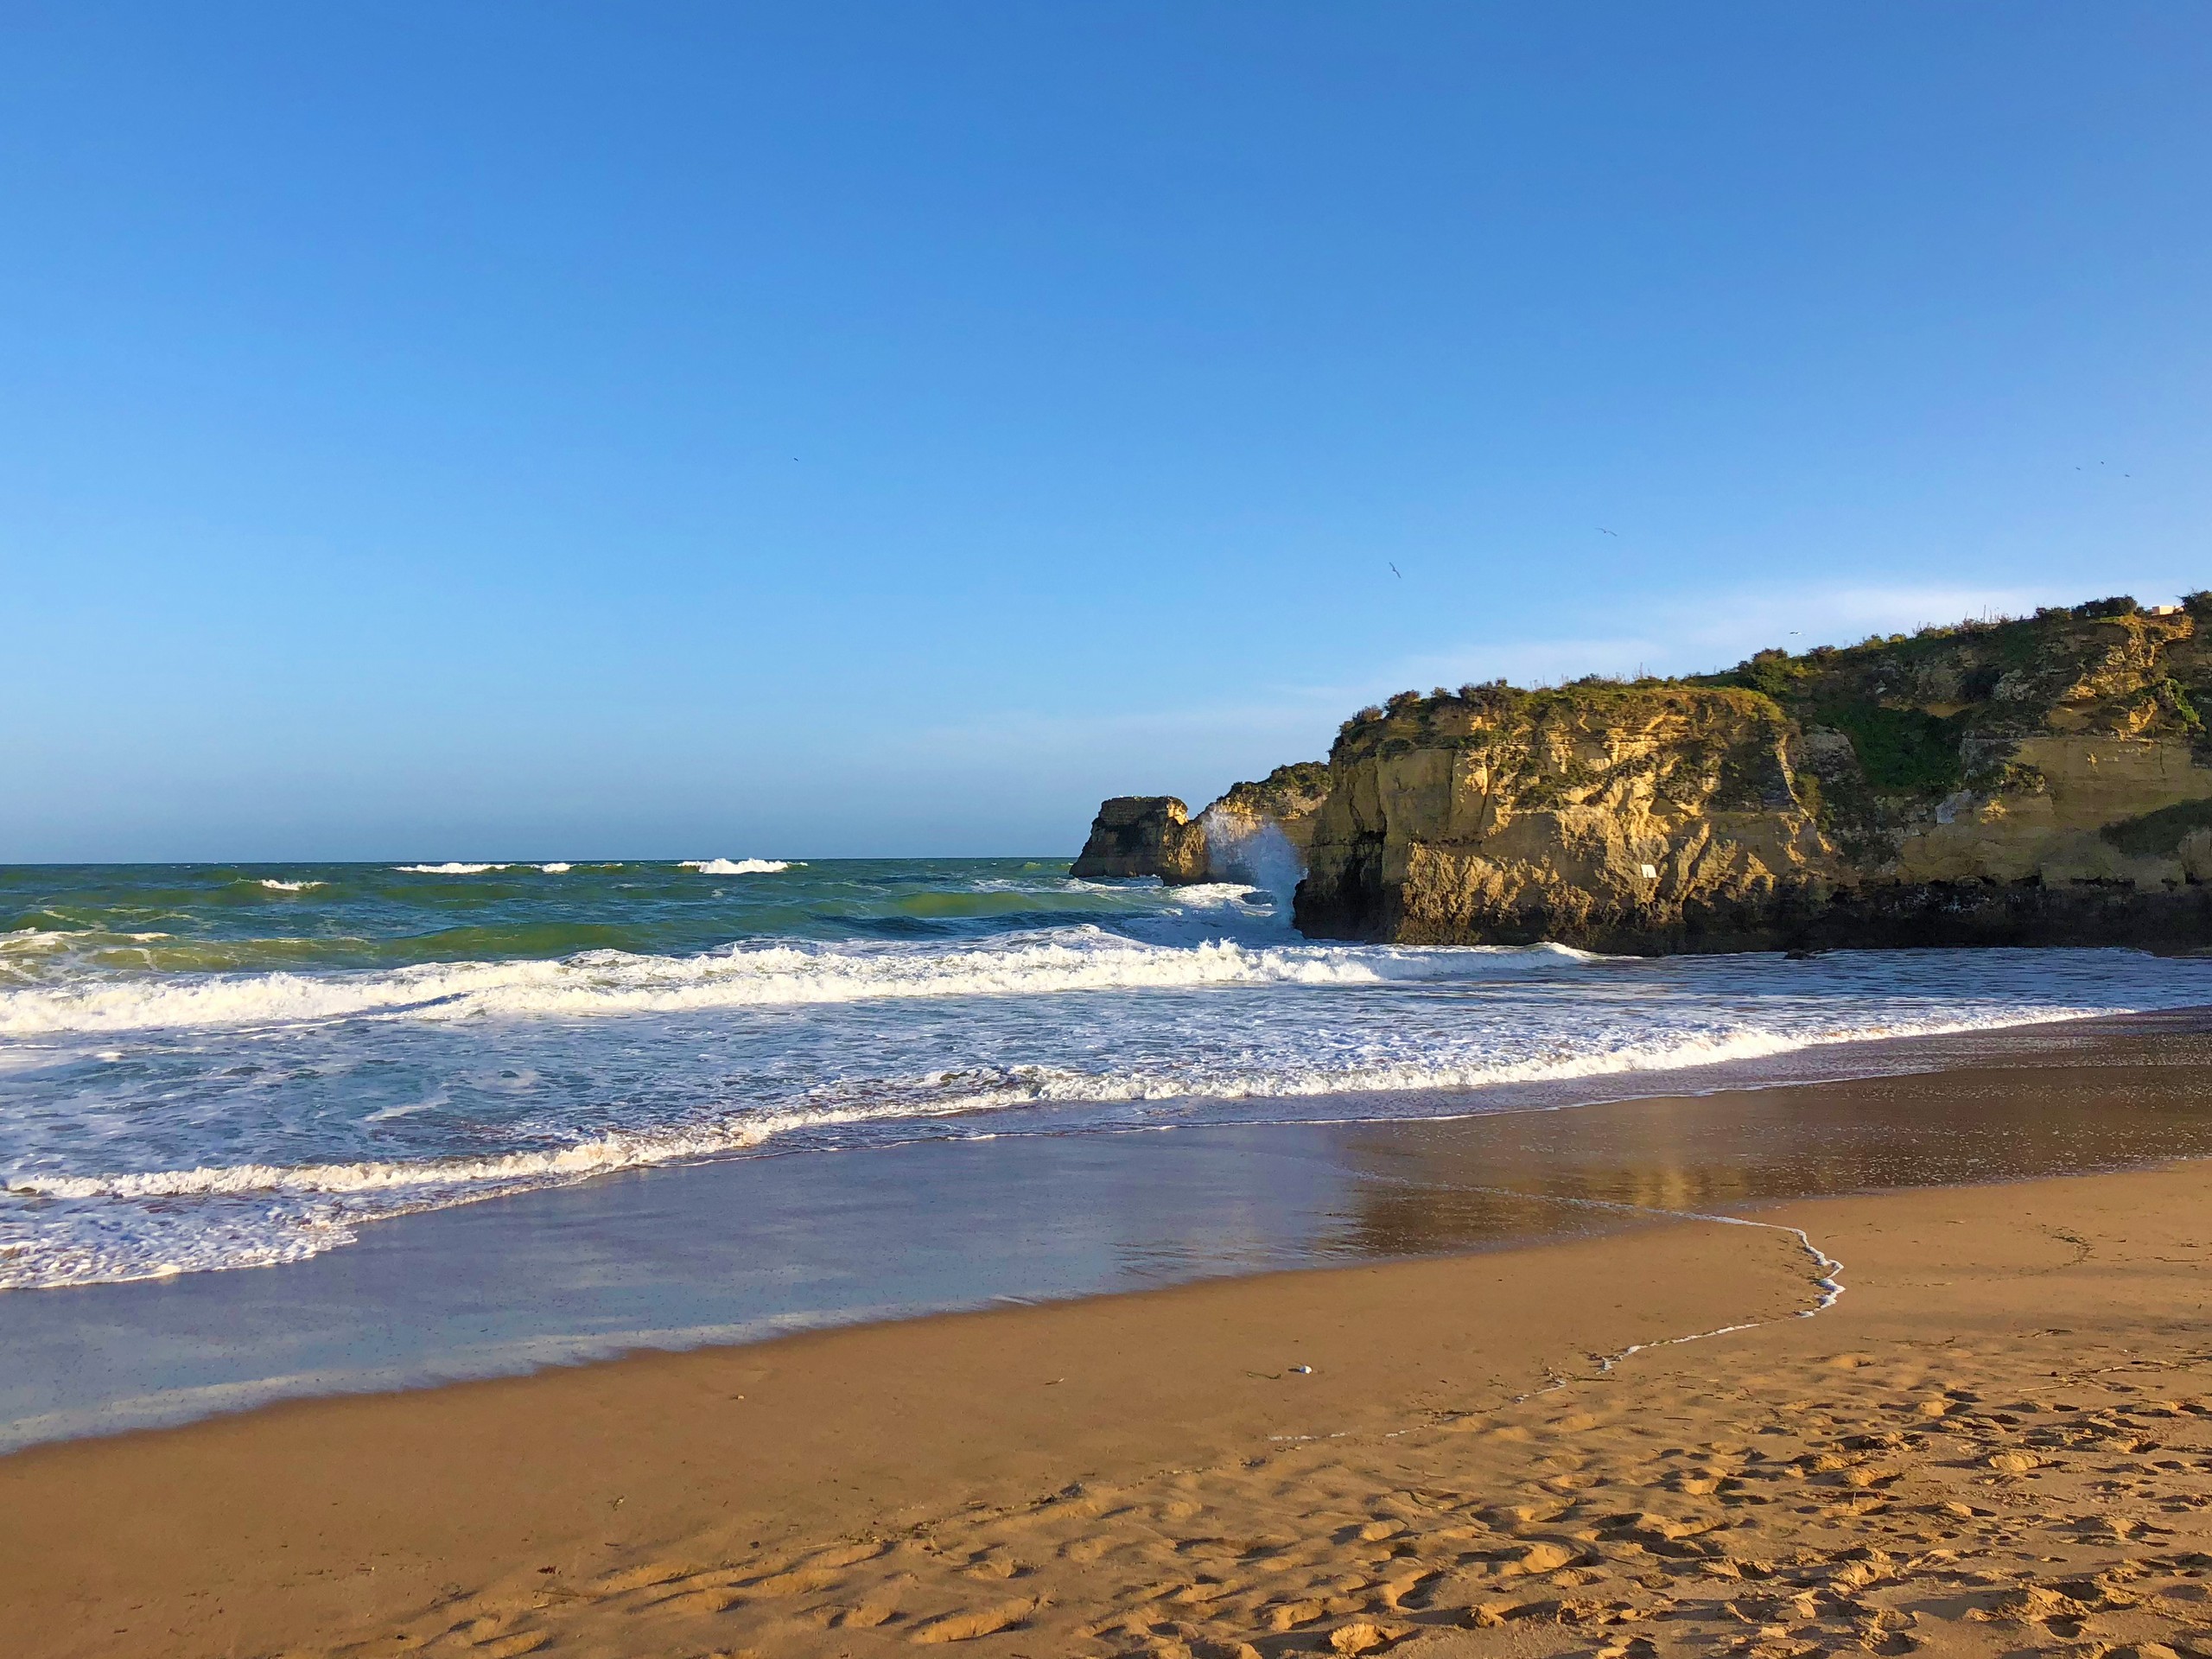 Coastal views seen while on a self-guided Algarve walk